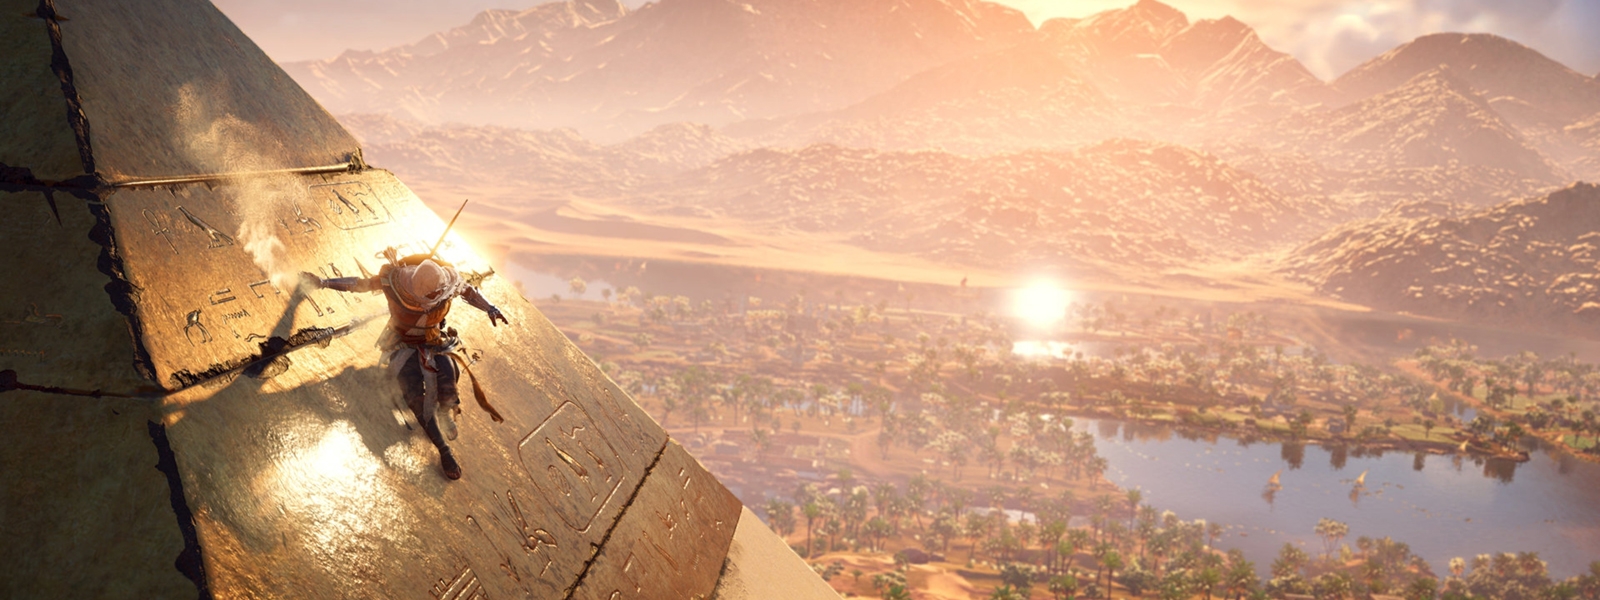 Assassins Creed Origins: все гробницы и древние таблички